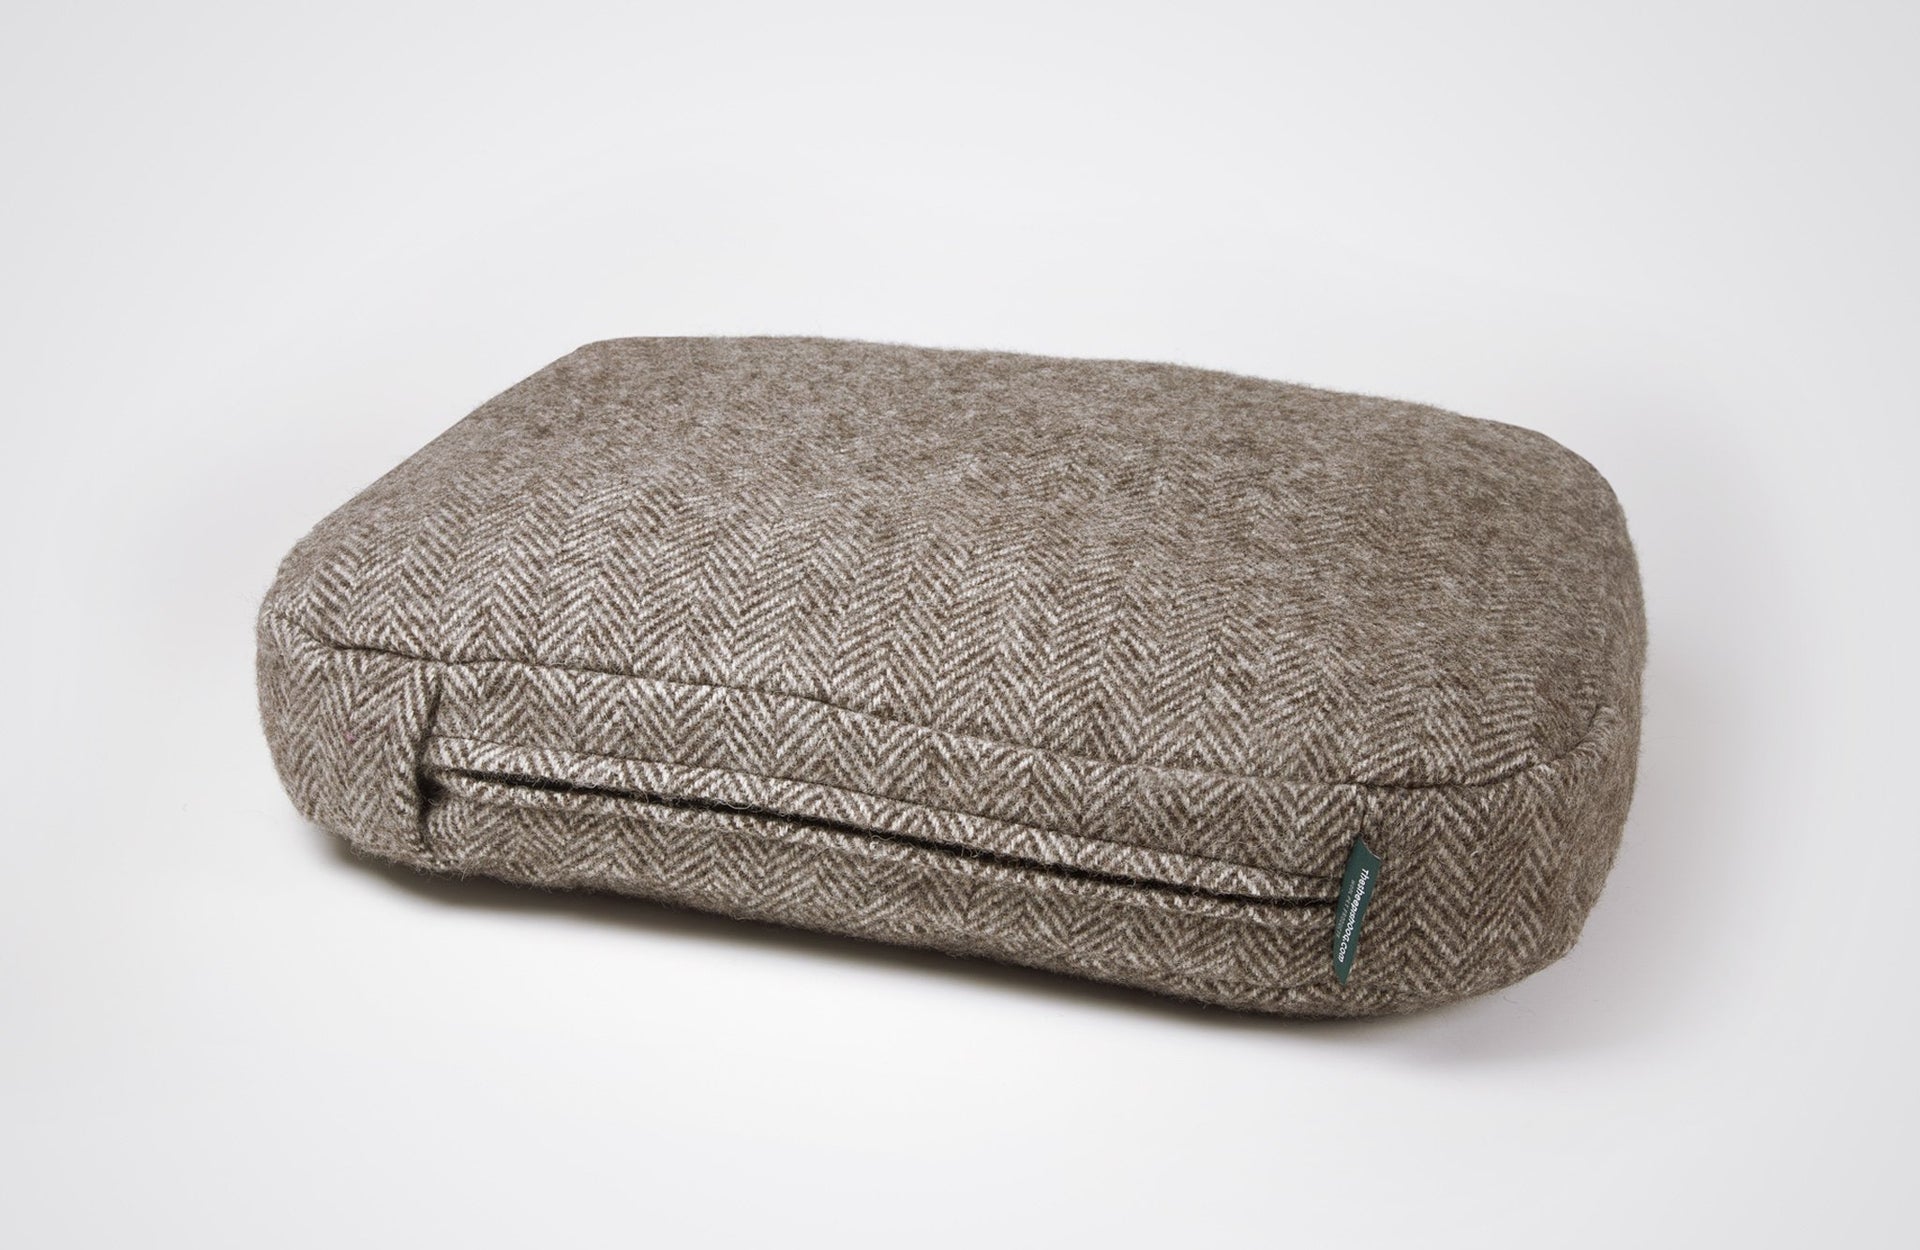 Undyed Irish Wool Dog Bed in Herringbone Pattern